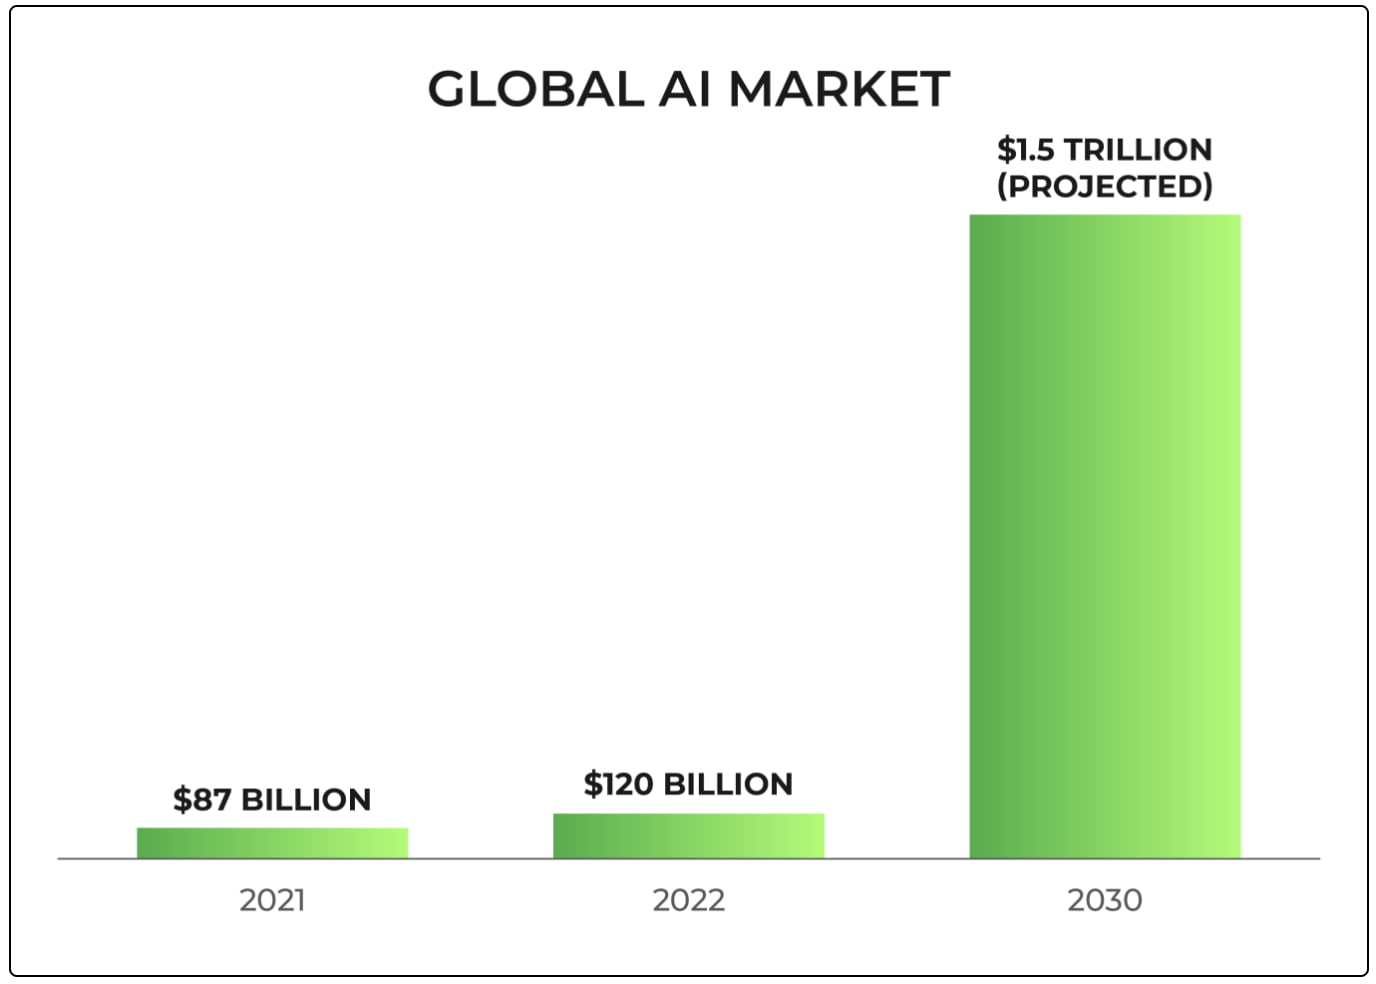 Global AI market